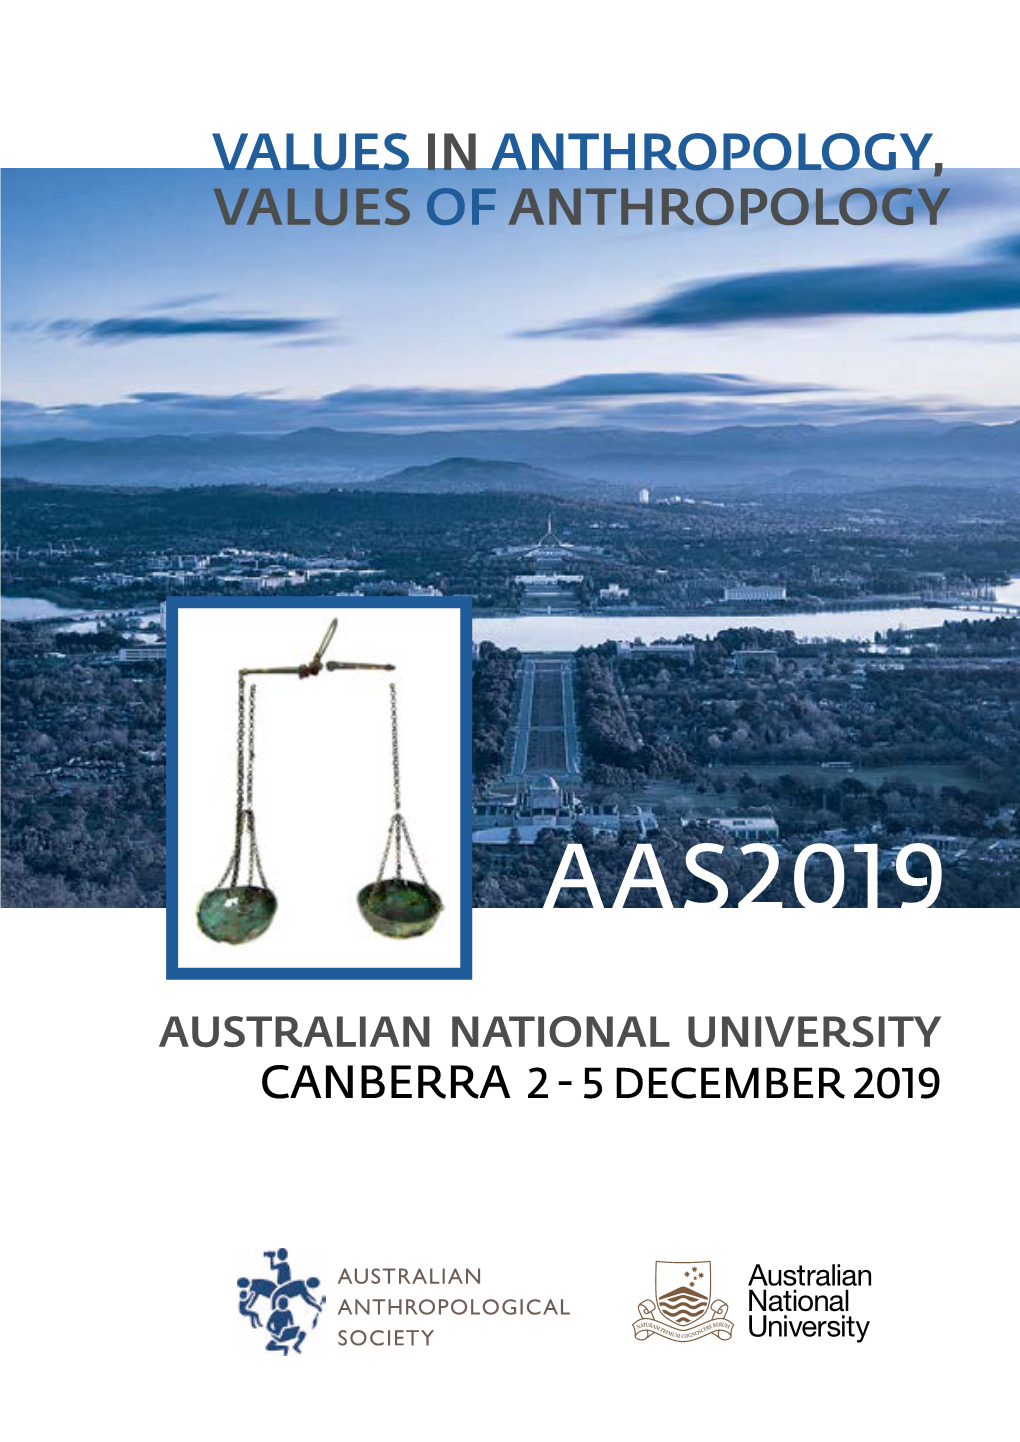 Aas2019 Australian National University Canberra 2 - 5 December 2019